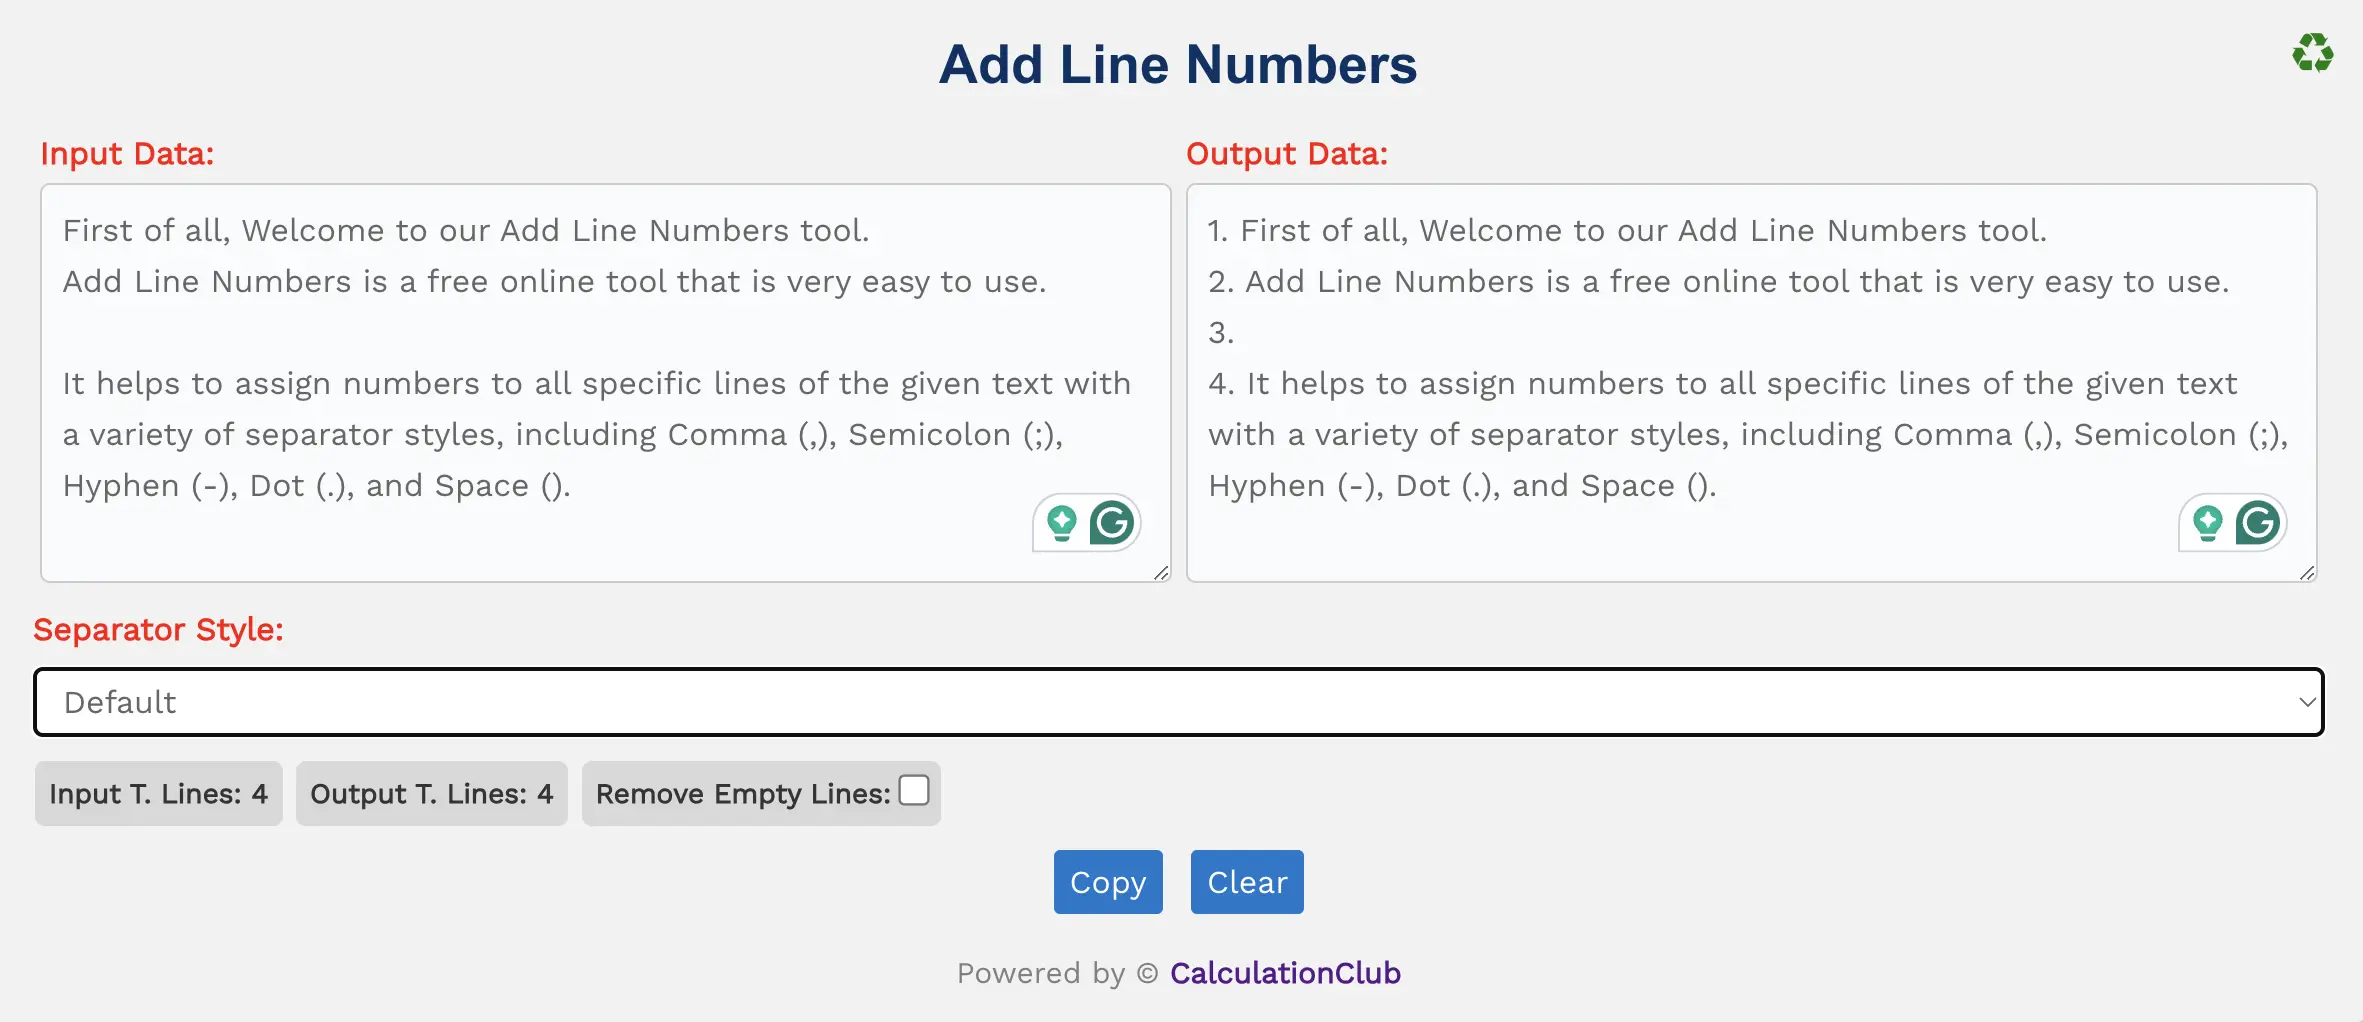 Add Line Numbers1 | CalculationClub